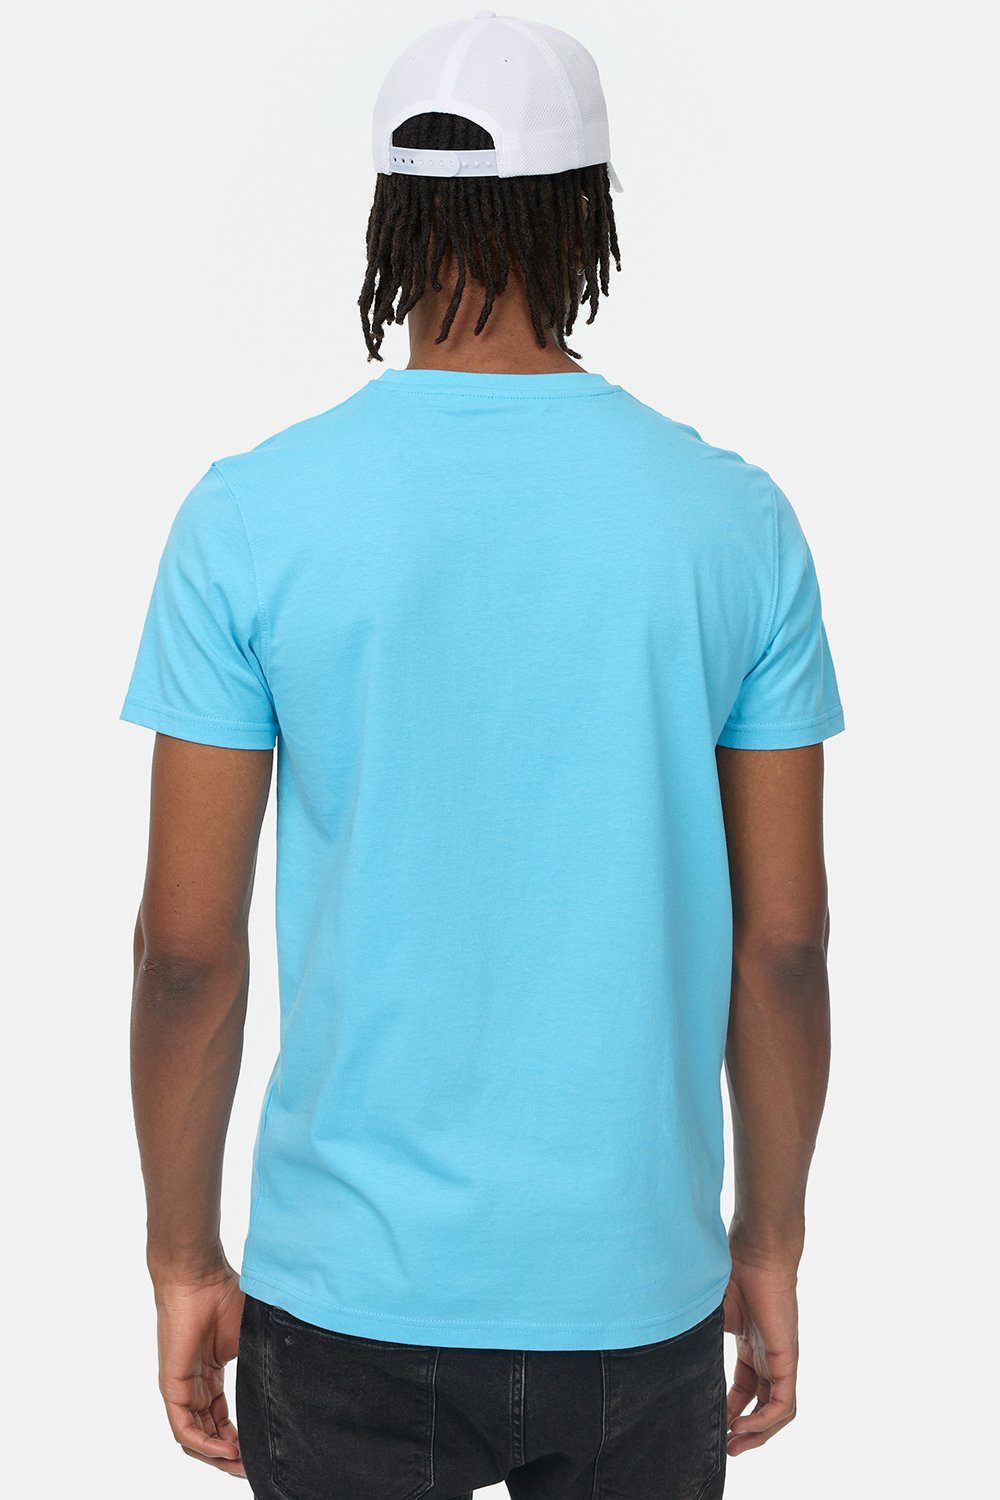 Lonsdale T-Shirt ALTANDHU Blue/Navy/White